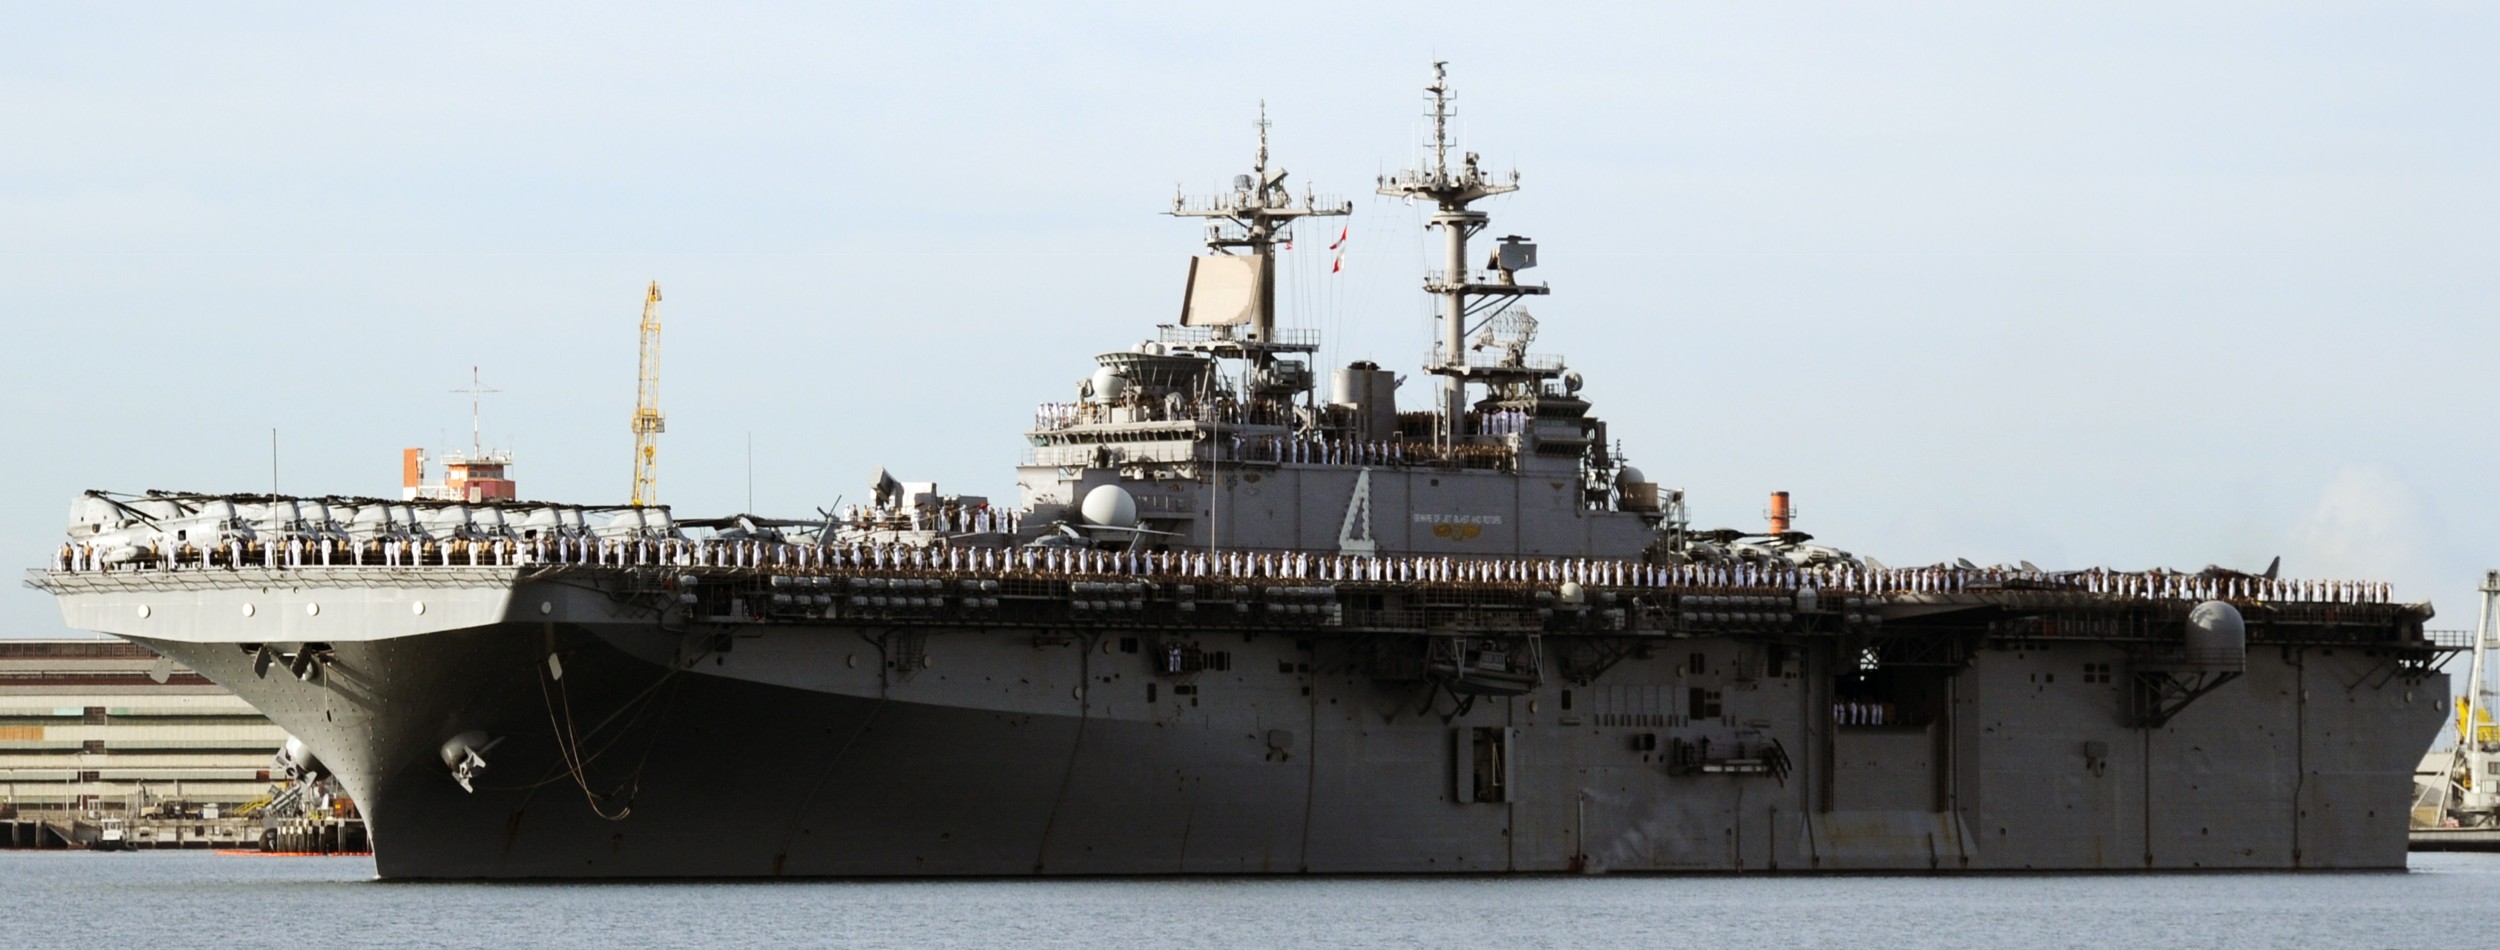 lhd-4 uss boxer wasp class amphibious assault ship dock landing us navy marines hmm-163 pearl harbor hickam hawaii 50